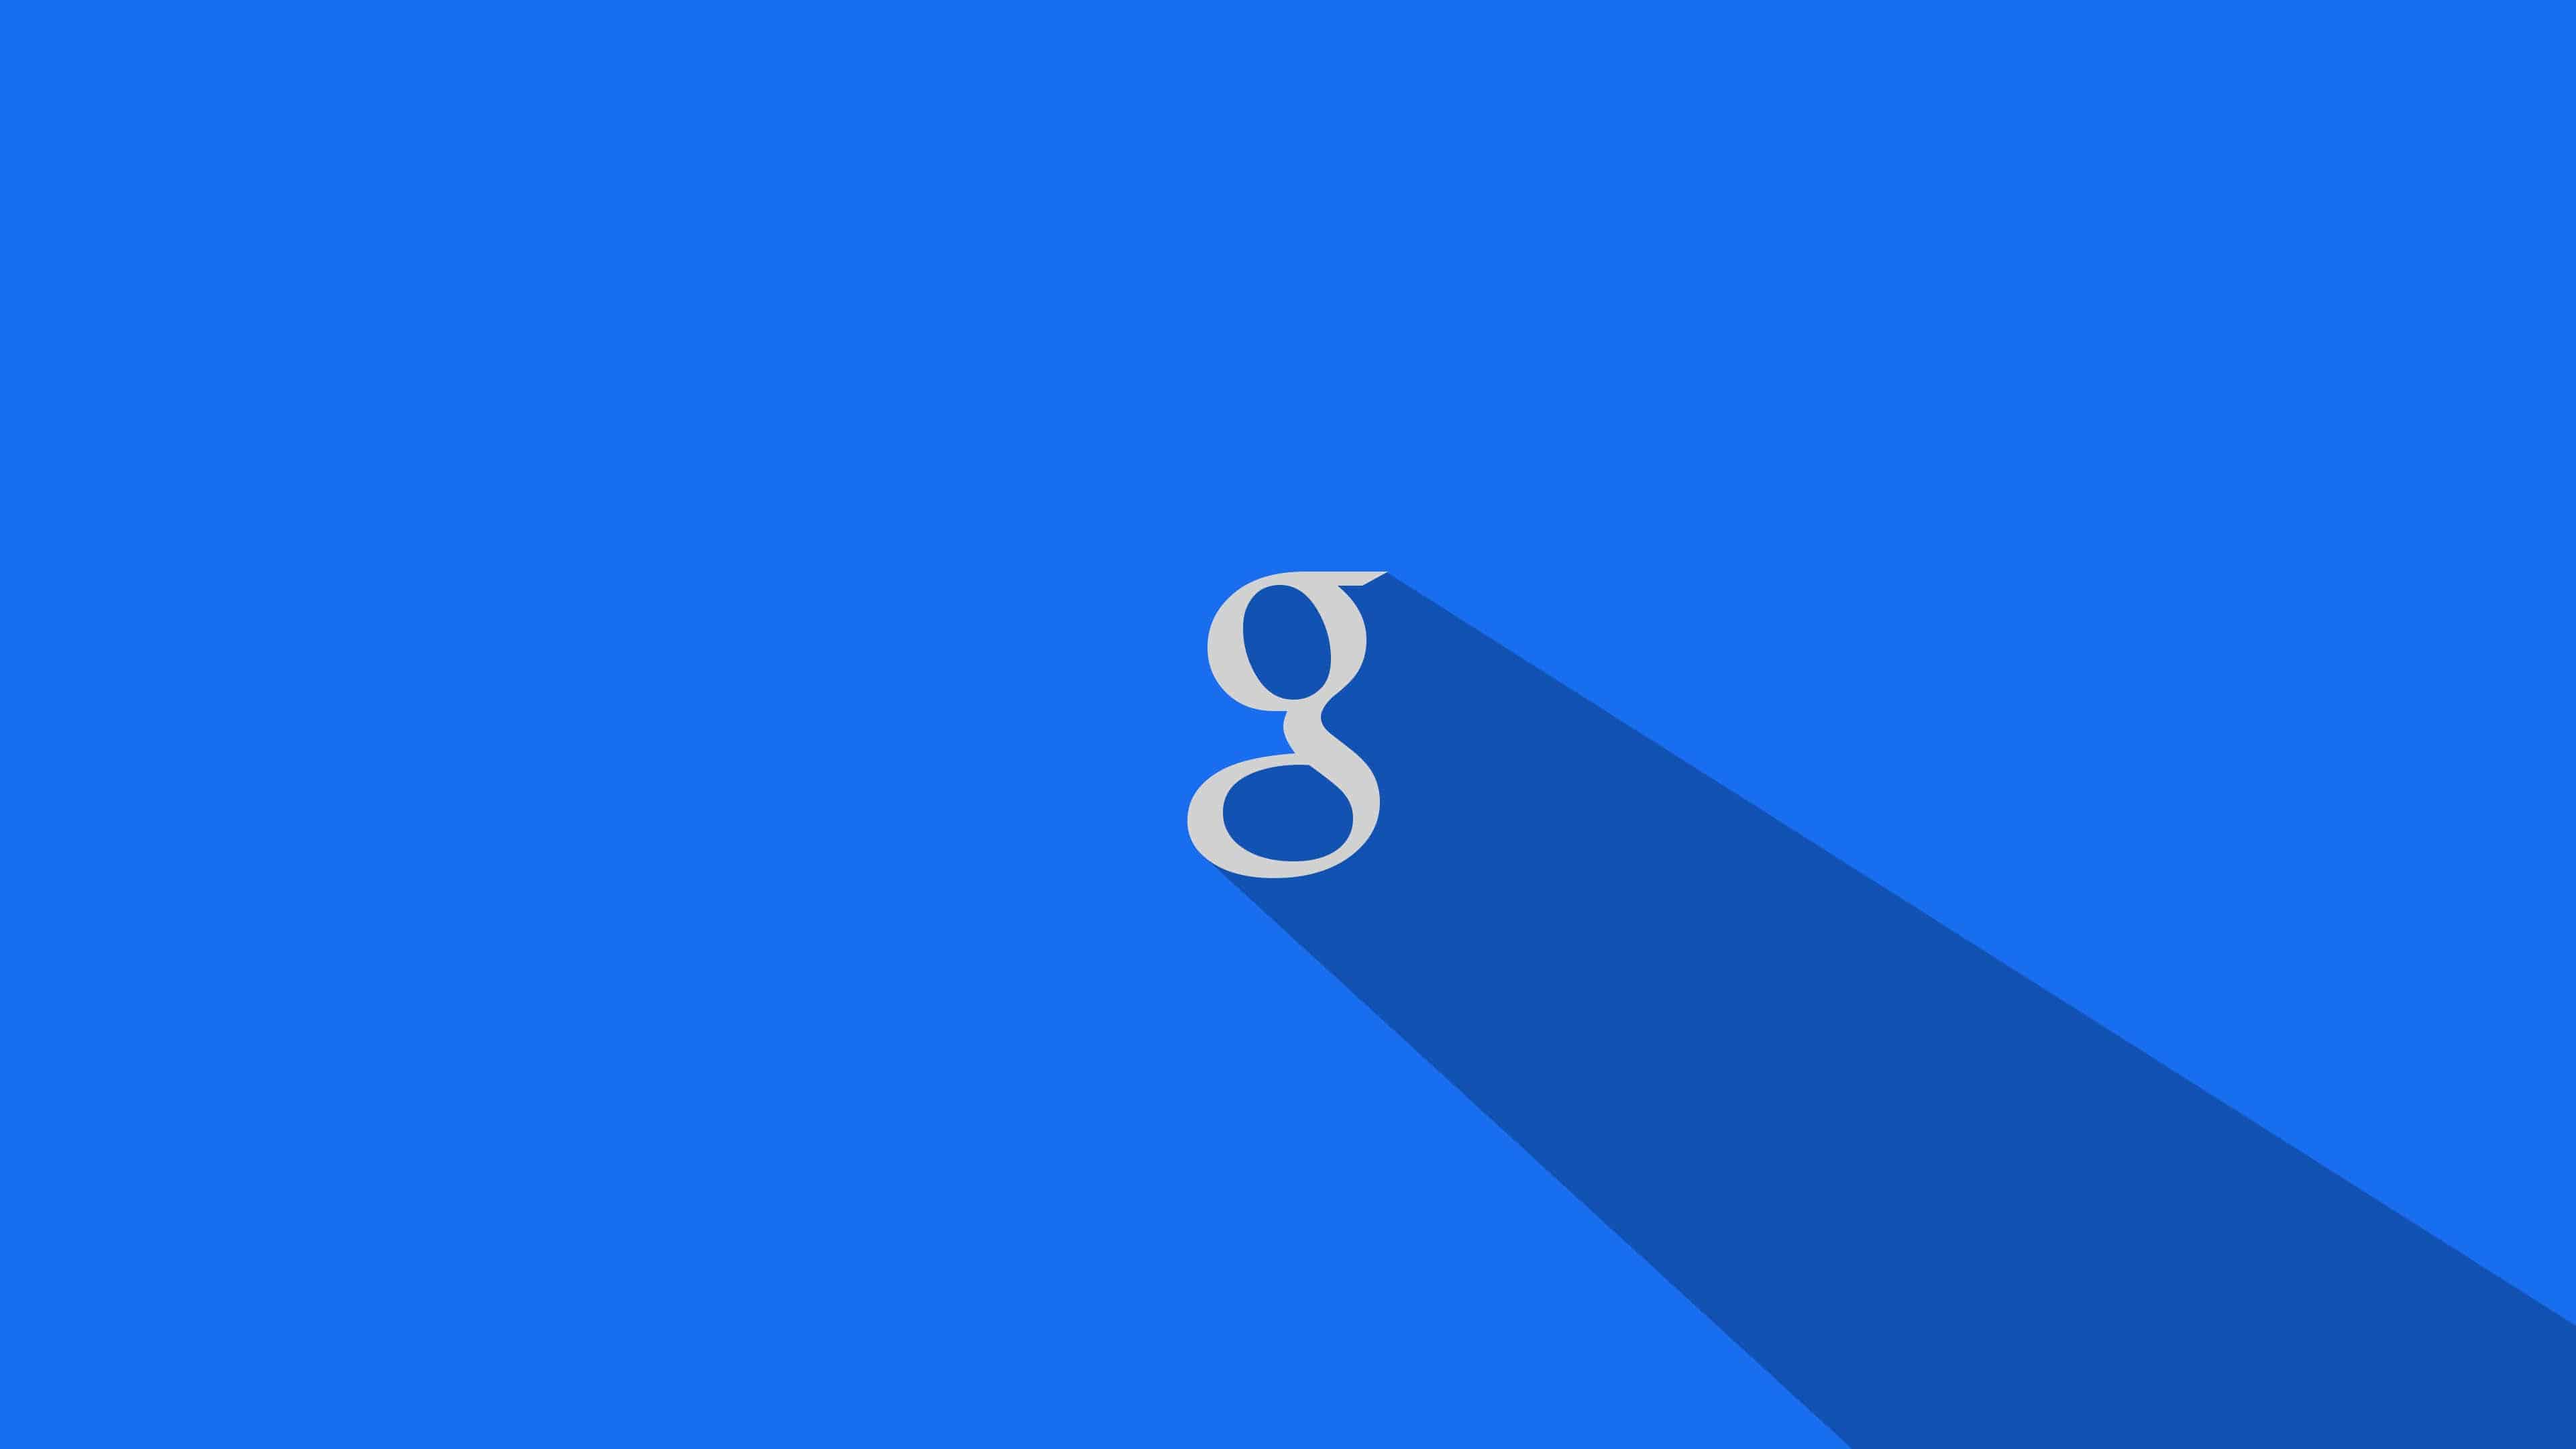 25 Free Google Wallpapers On Wallpapersafari